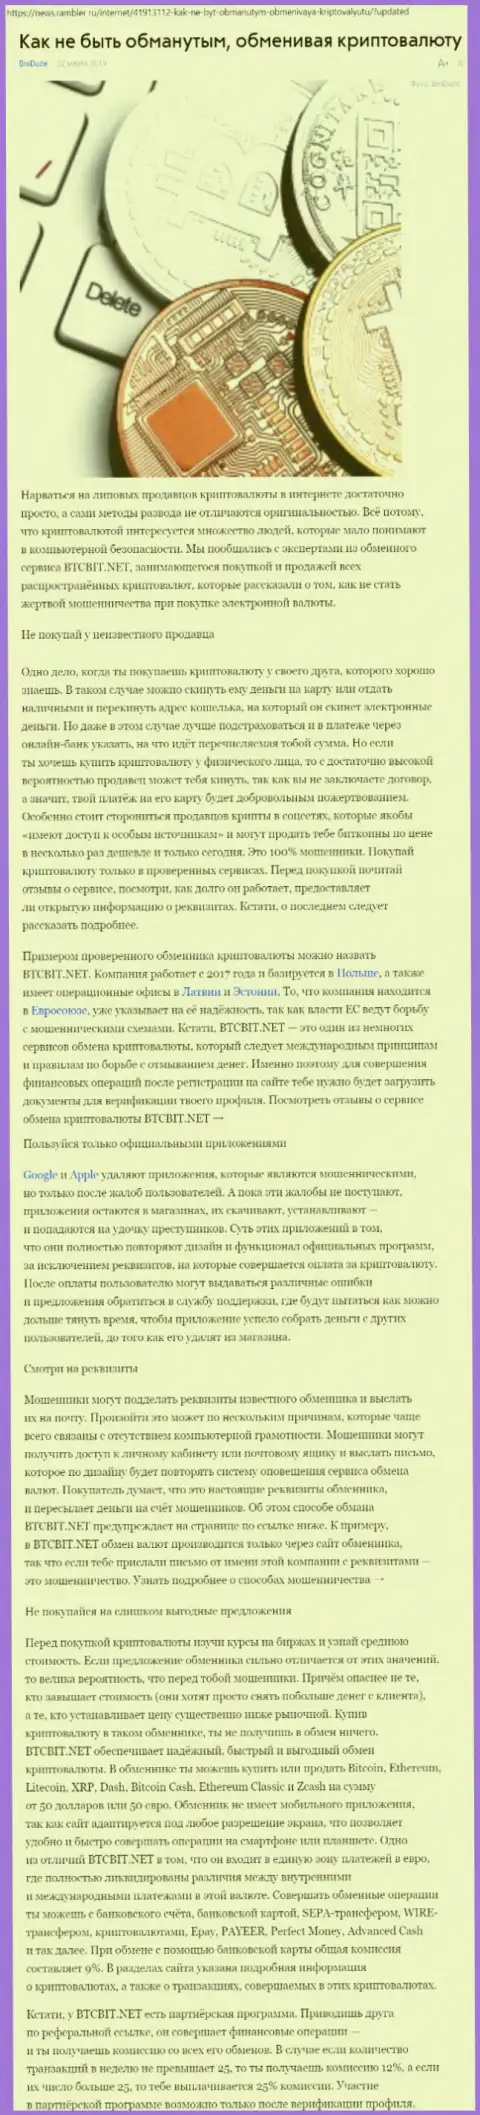 Публикация об online обменнике БТЦ БИТ на news rambler ru